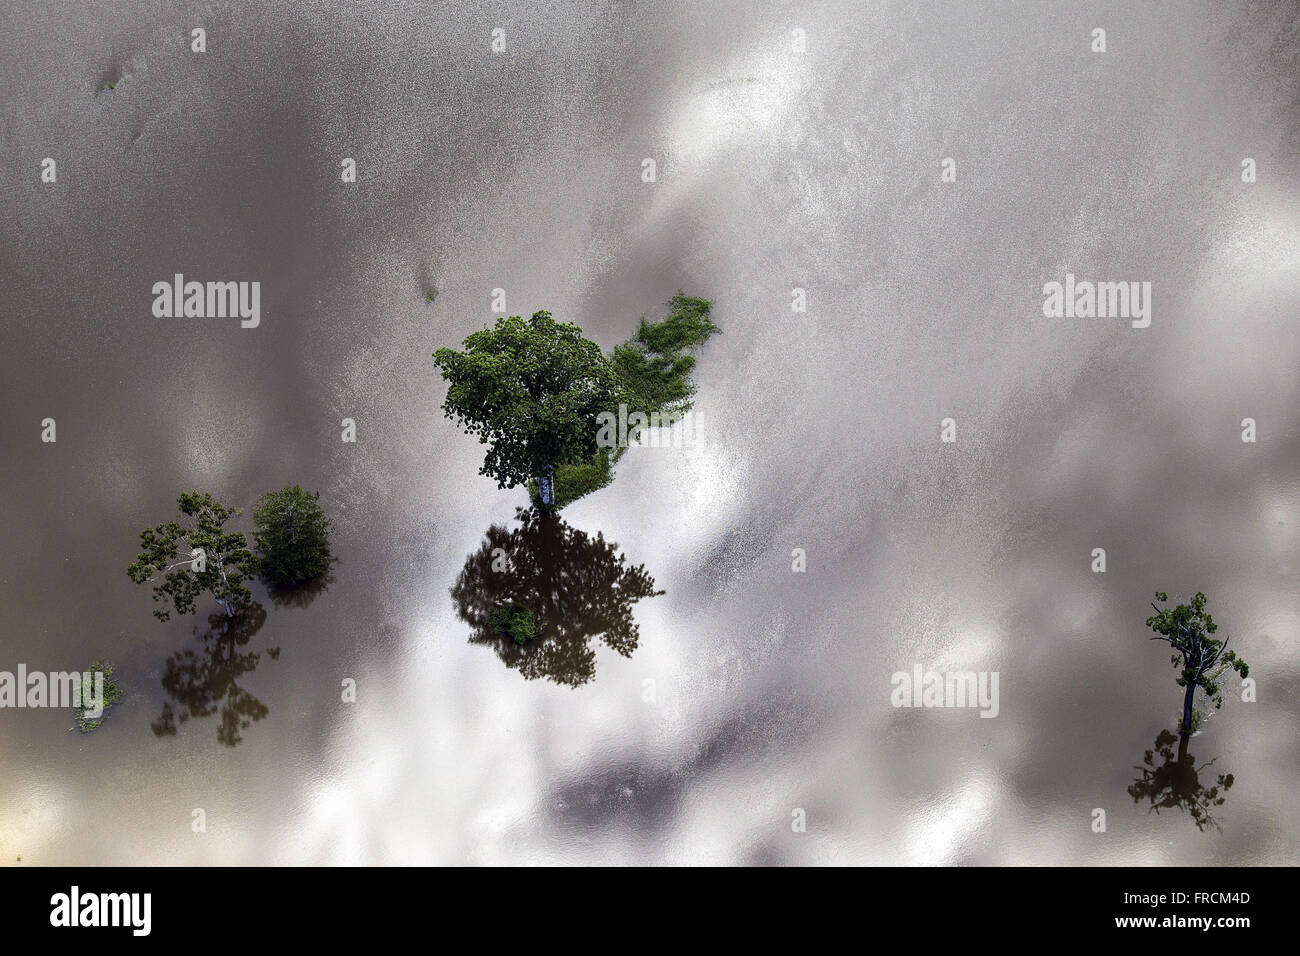 Vista aérea de árvores alagadas durante un cheia do Rio Amazonas Foto de stock